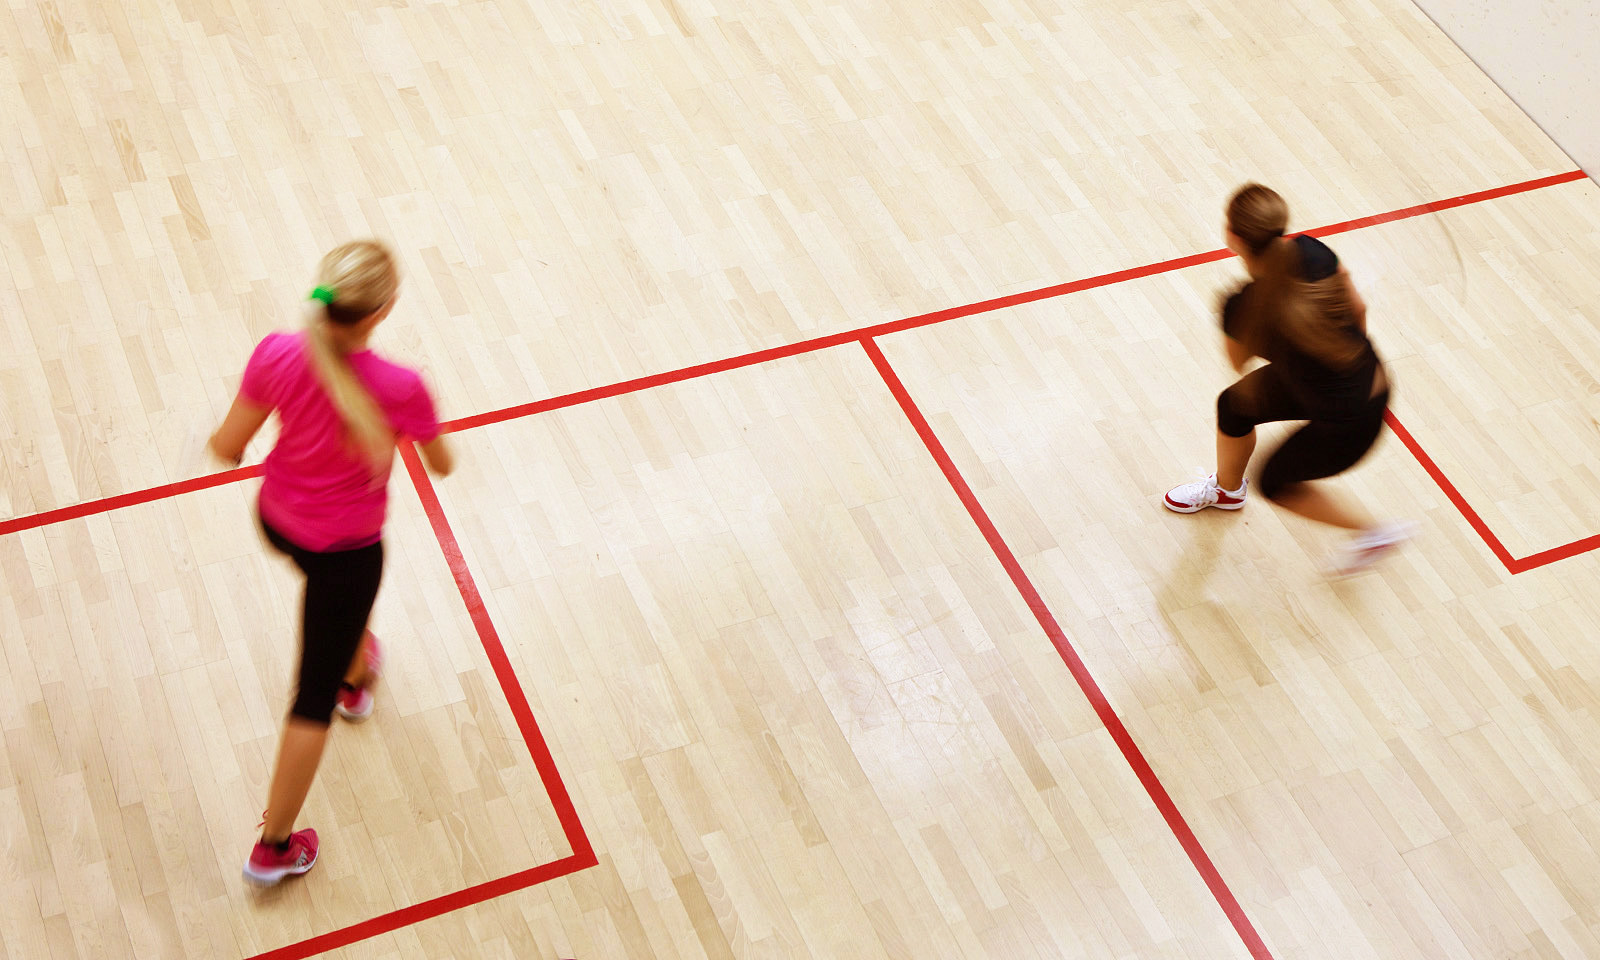 Biddenden Squash Club lady members enjoying a friendly game of squash.